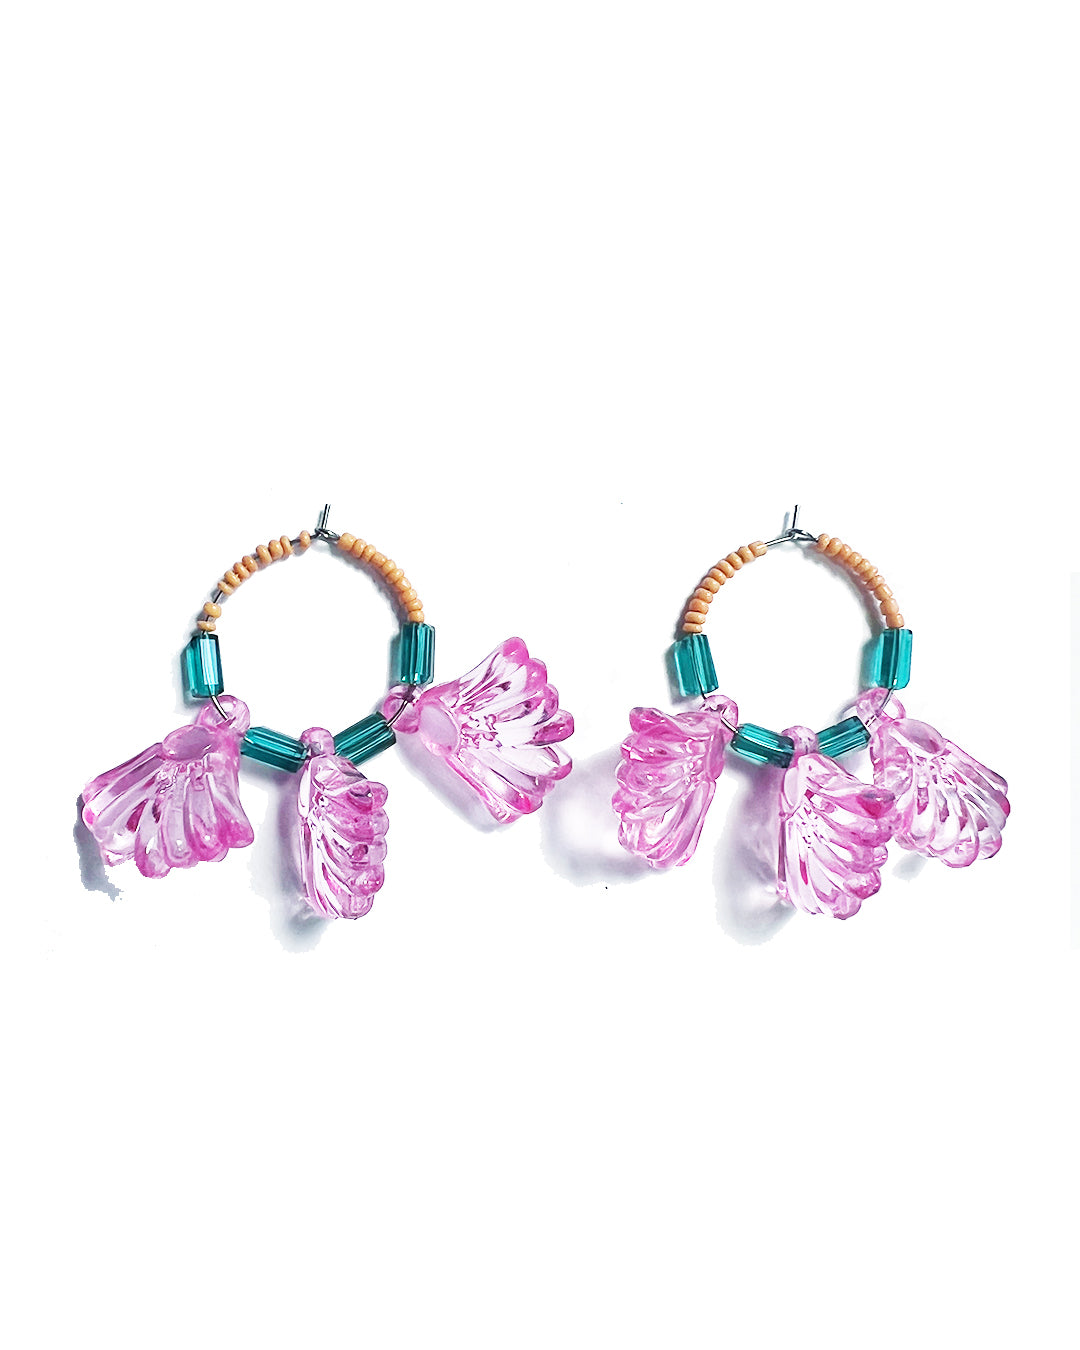 Pink Aqua Peach Fiesta Earrings  | cukimber designs